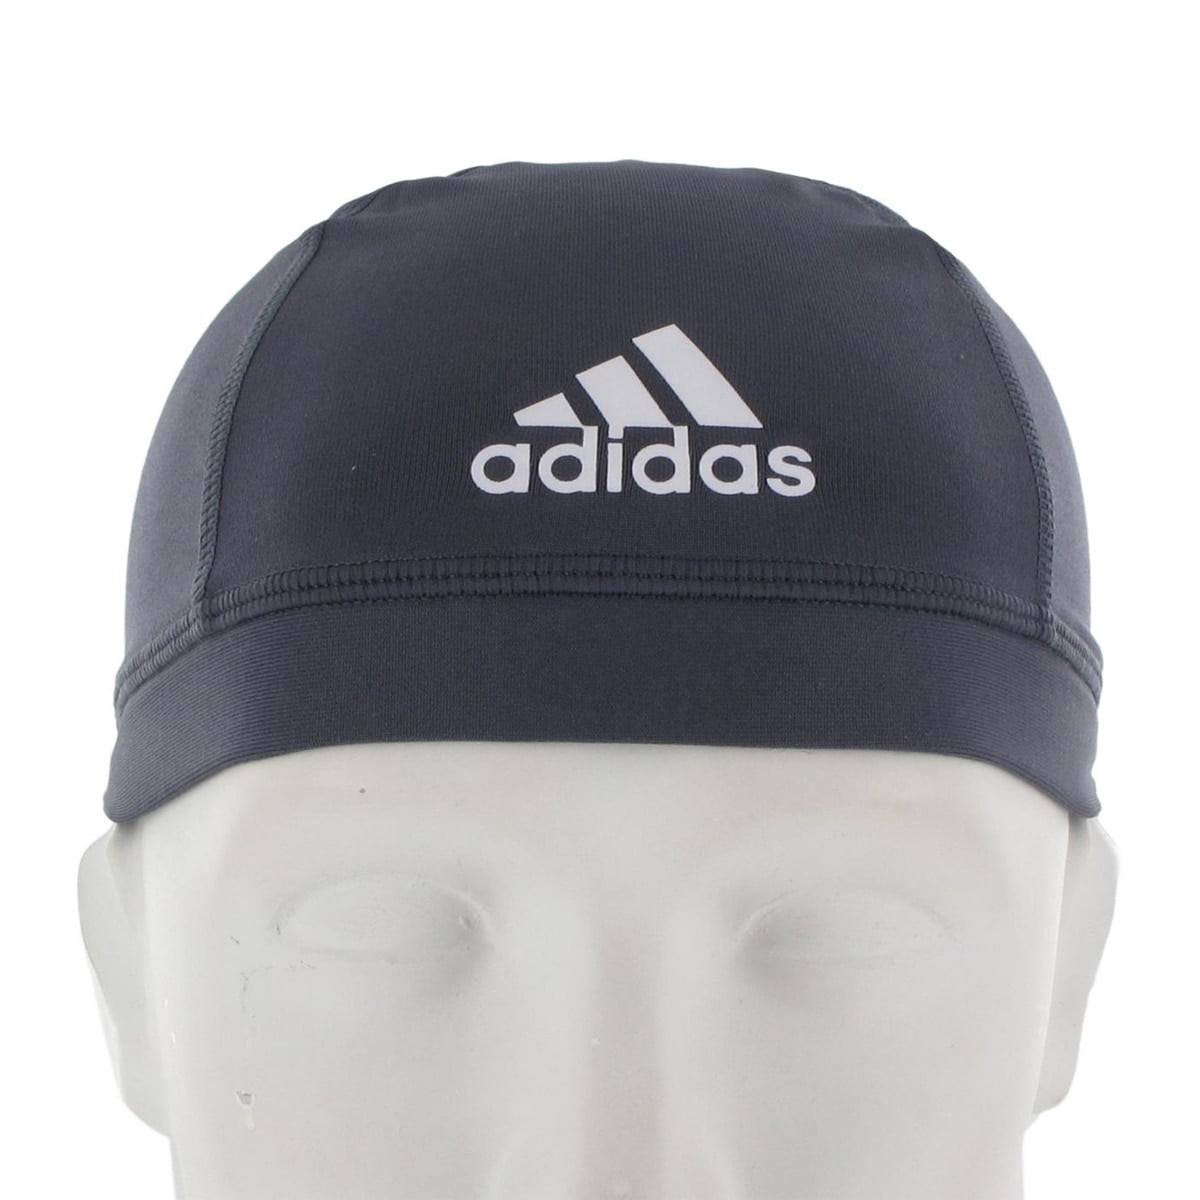 Adidas Football Skull Wrap Headband - Various Colors - Walmart.com